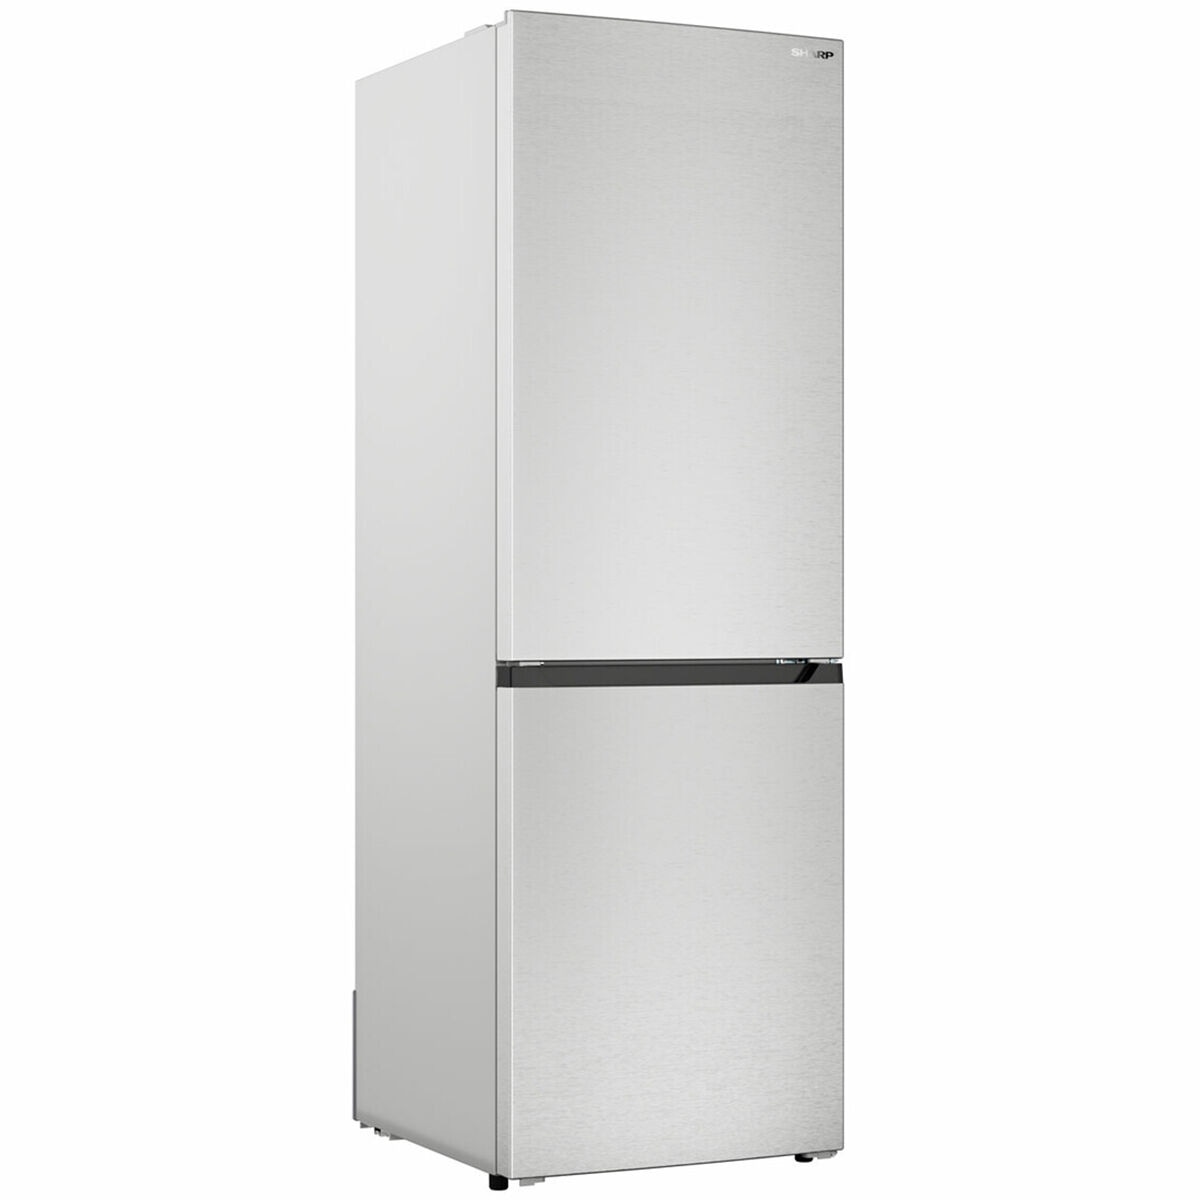 Sharp 24 in. 11.5 cu. ft. Counter Depth Bottom Freezer Refrigerator -  Stainless Steel